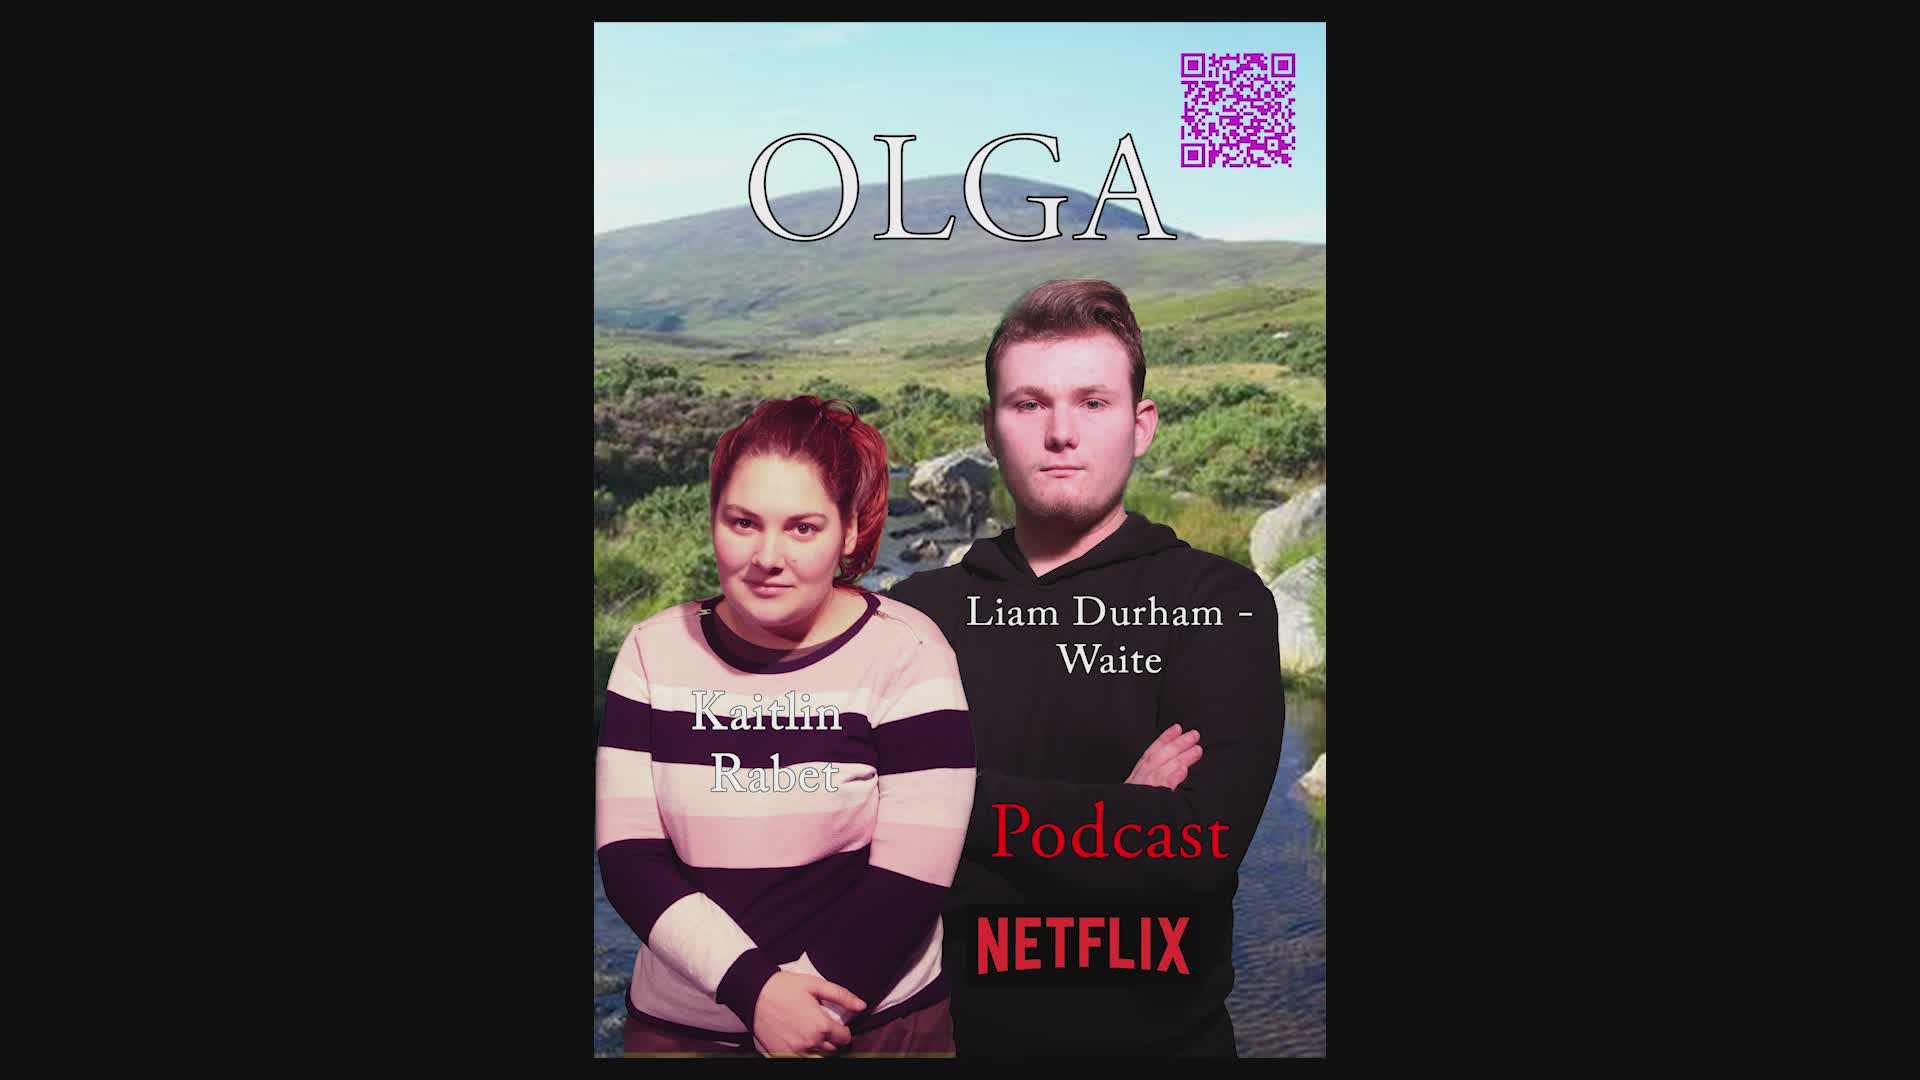 Olga Podcast